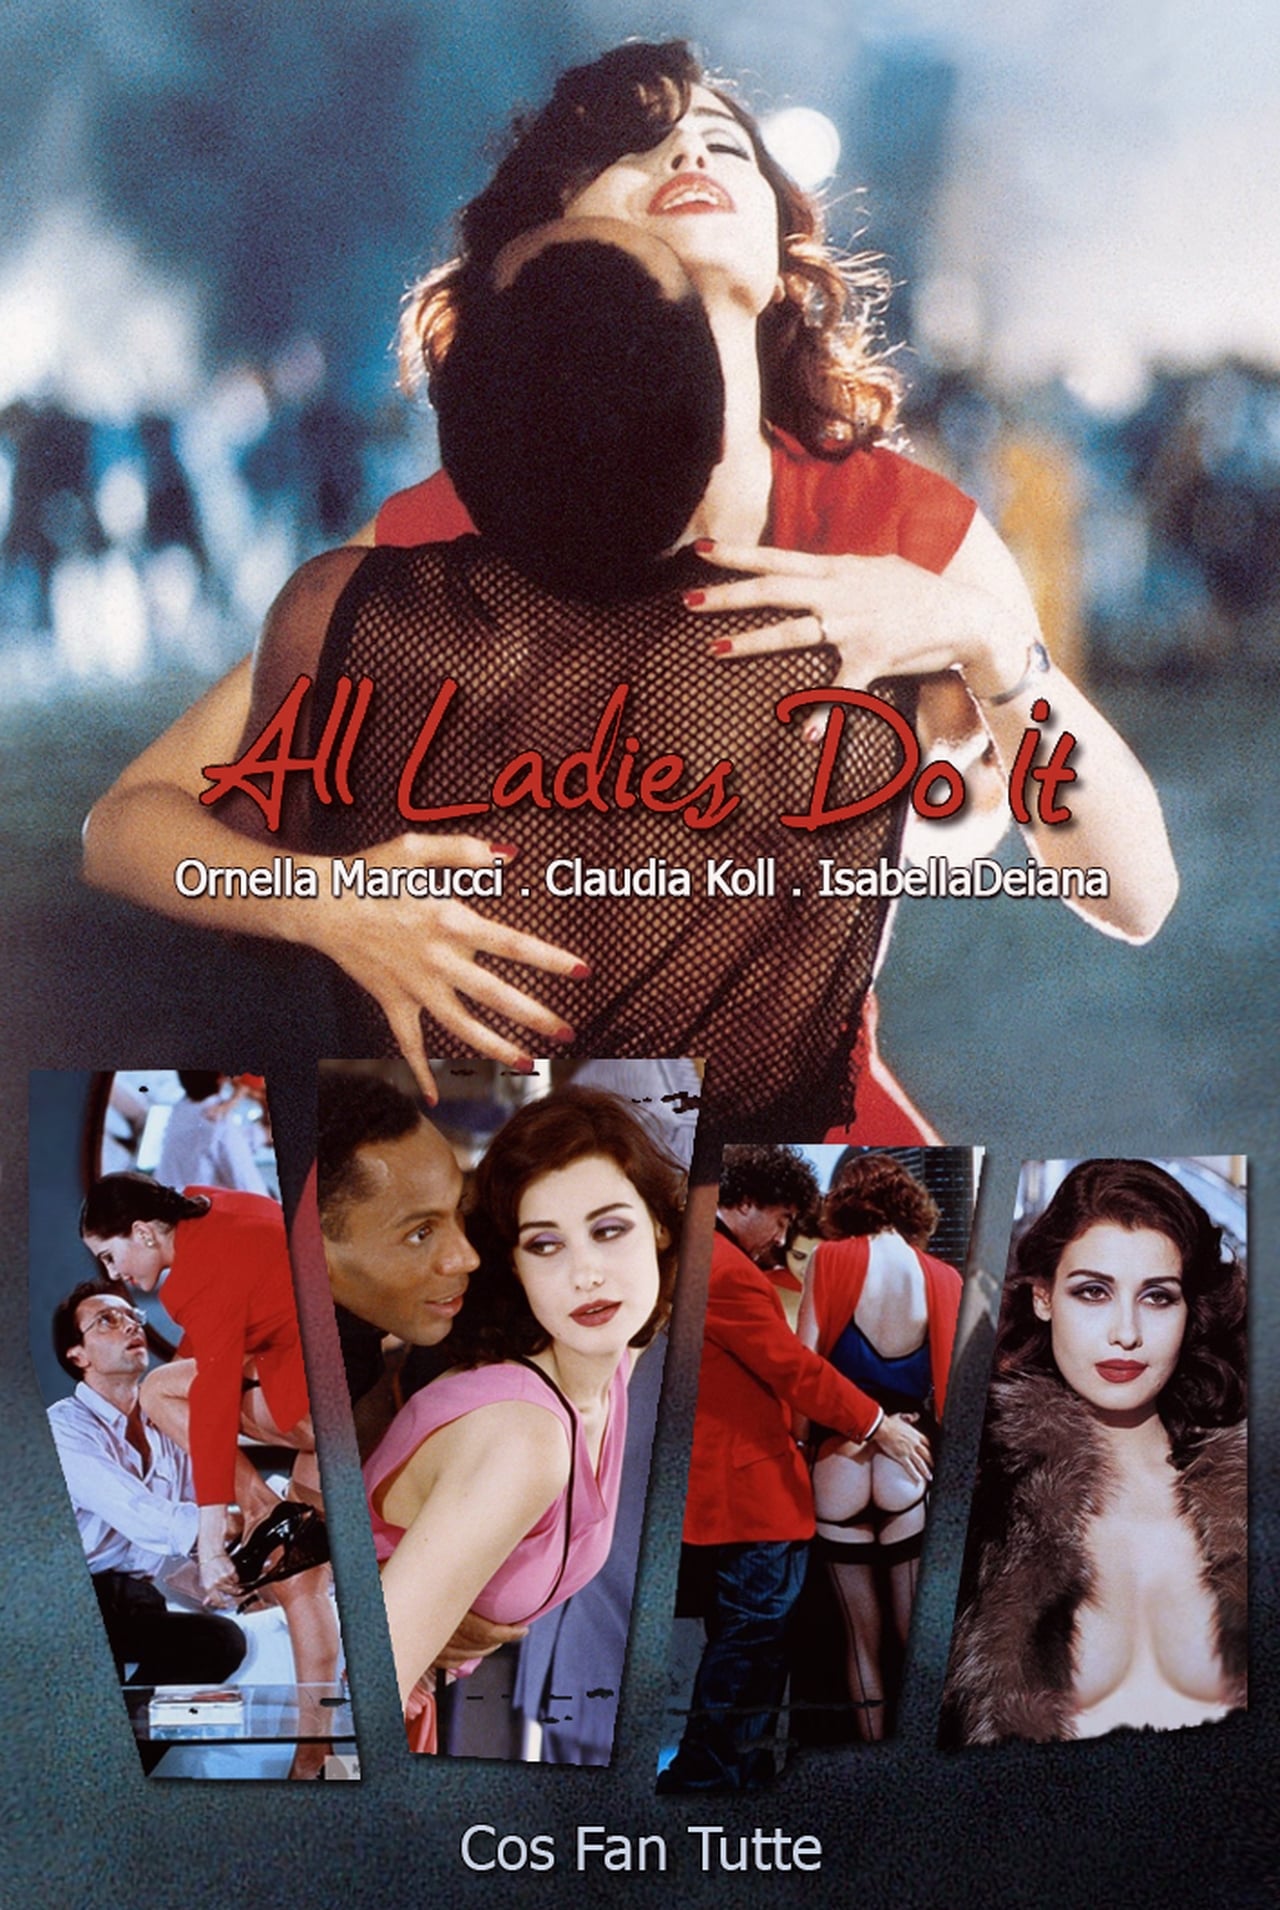 All Ladies Do It (1992) Screenshot 1 